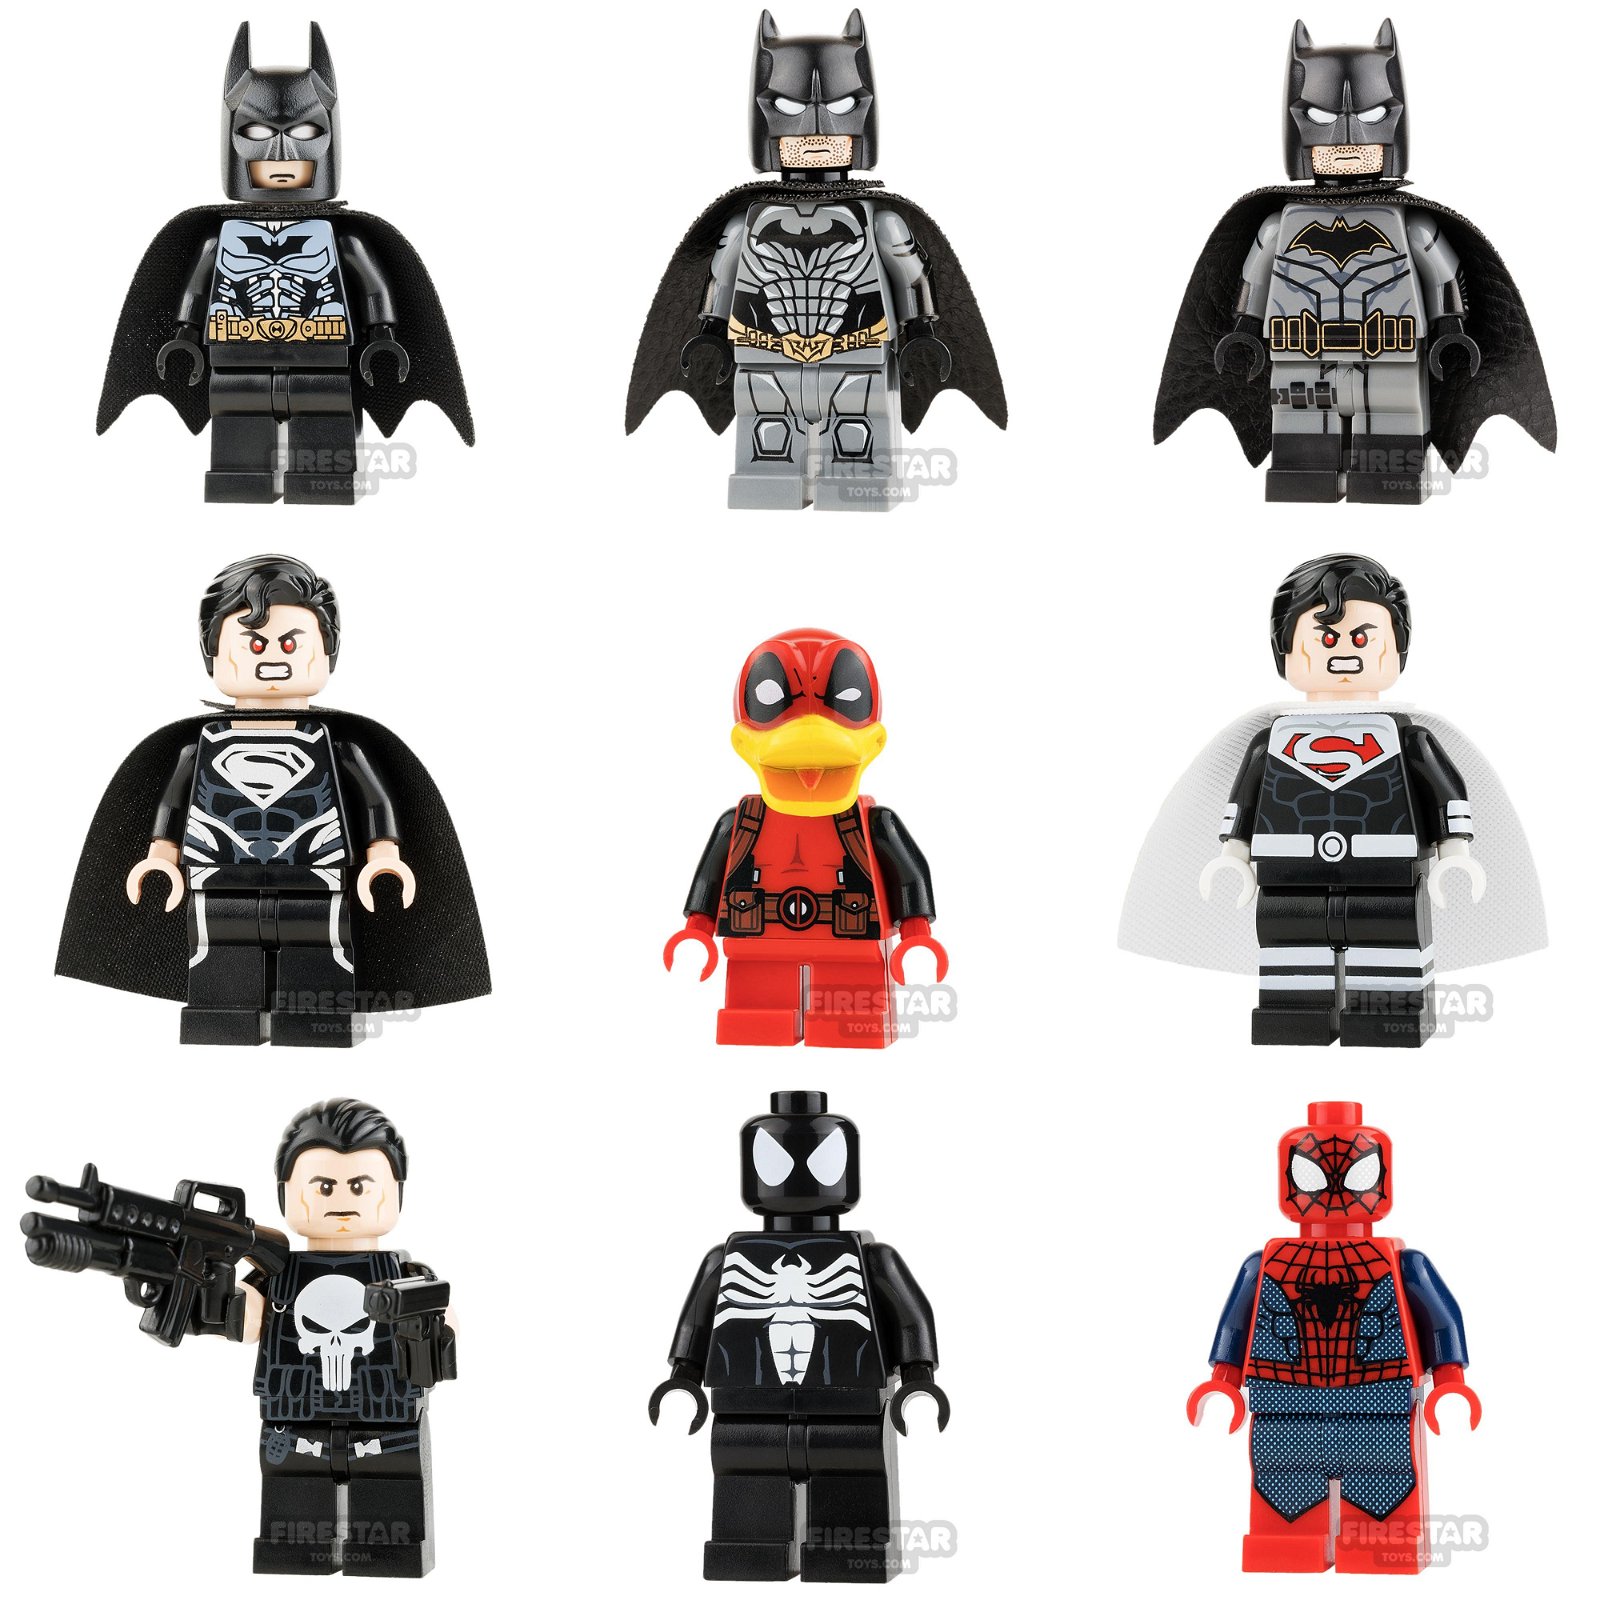 2018 lego batman movie minifigures